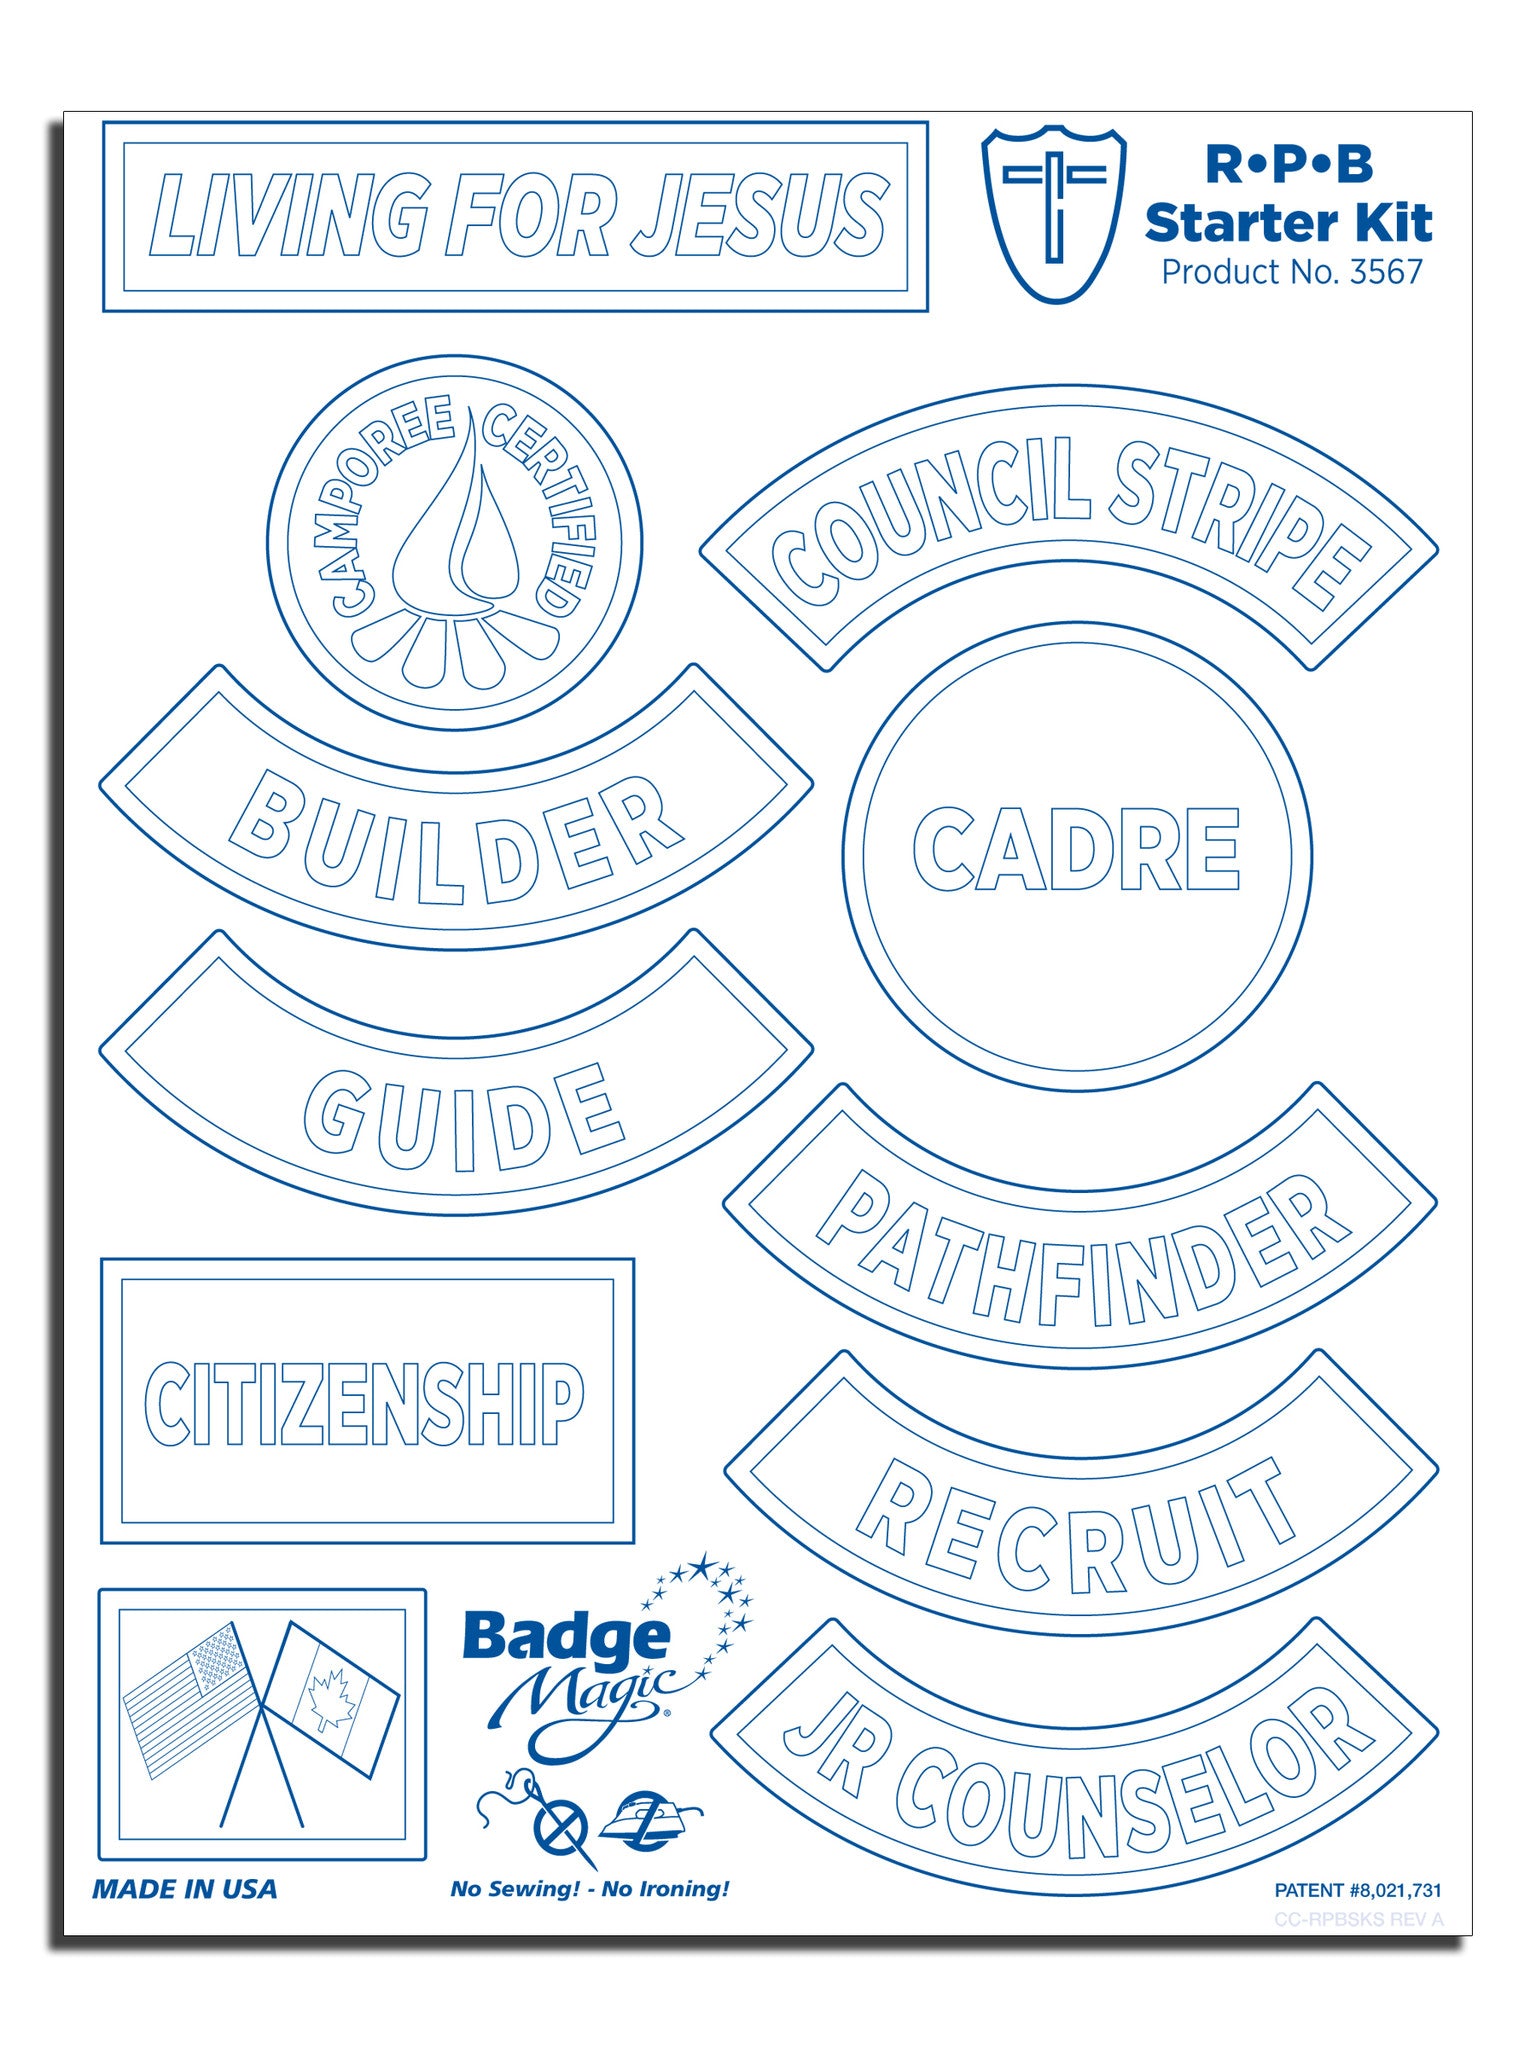 Badge Magic- starter kit